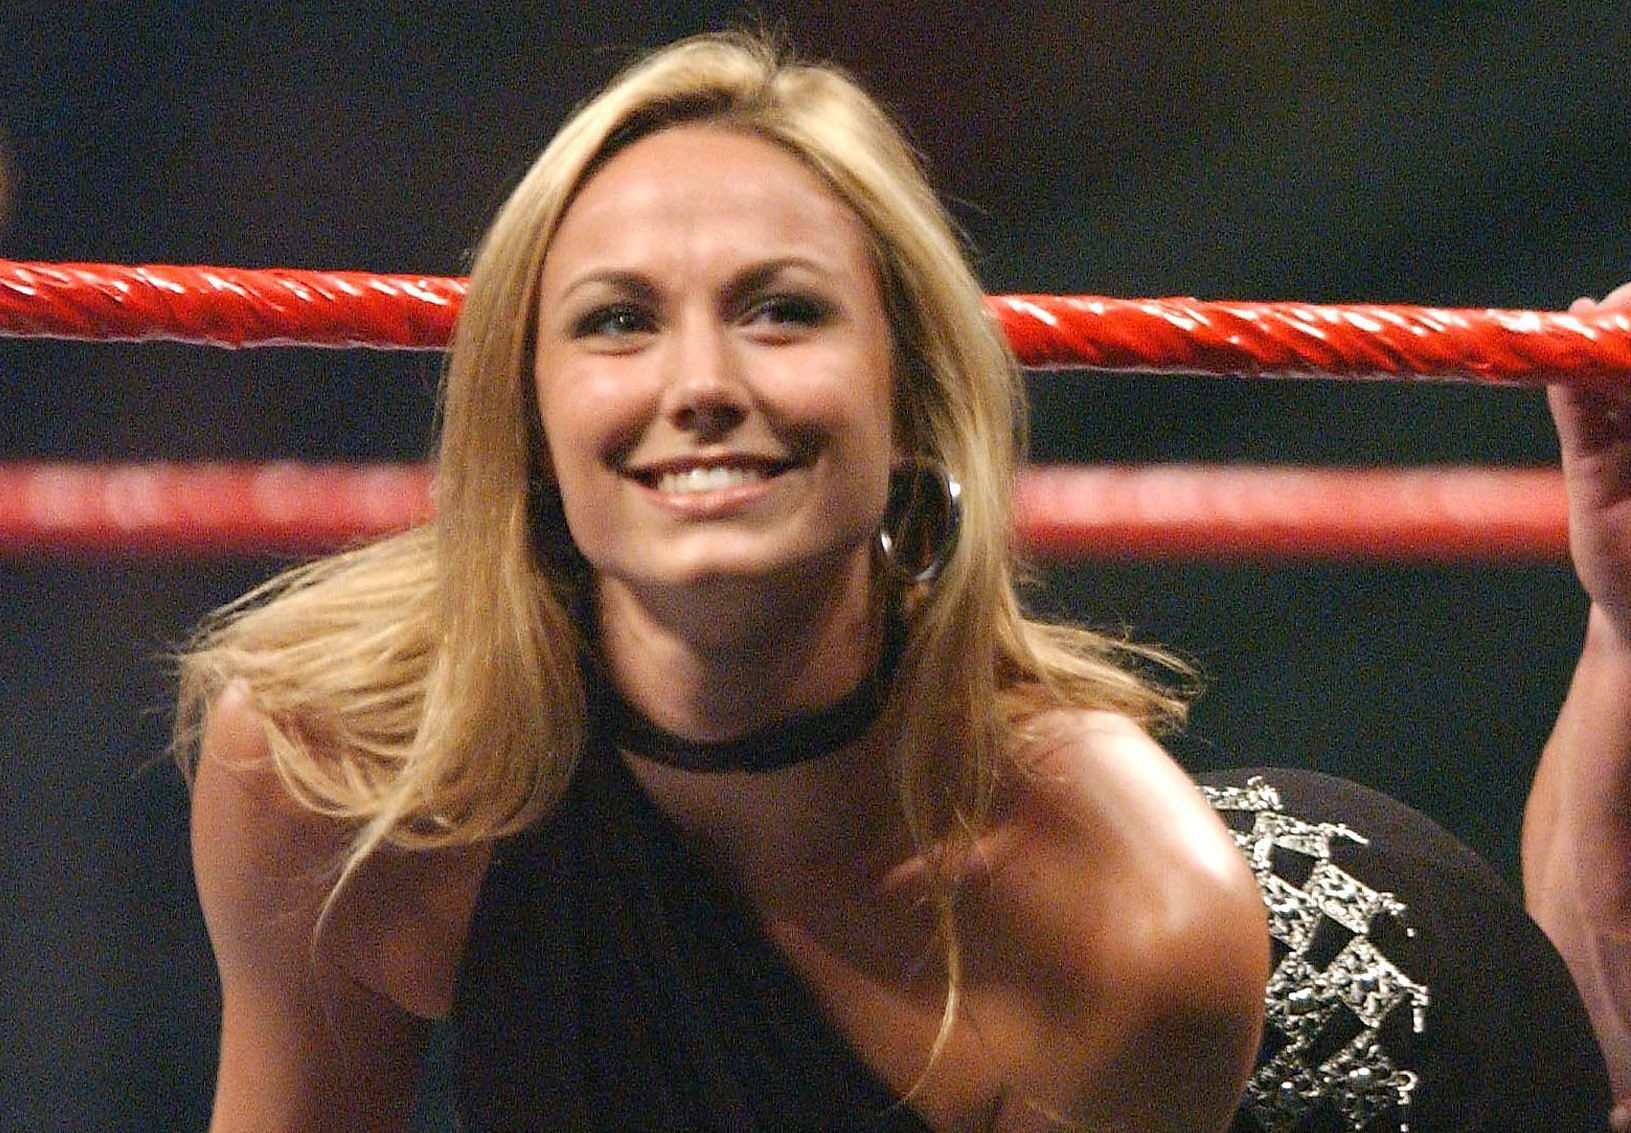 WWE Hall of Famer Stacy Keibler